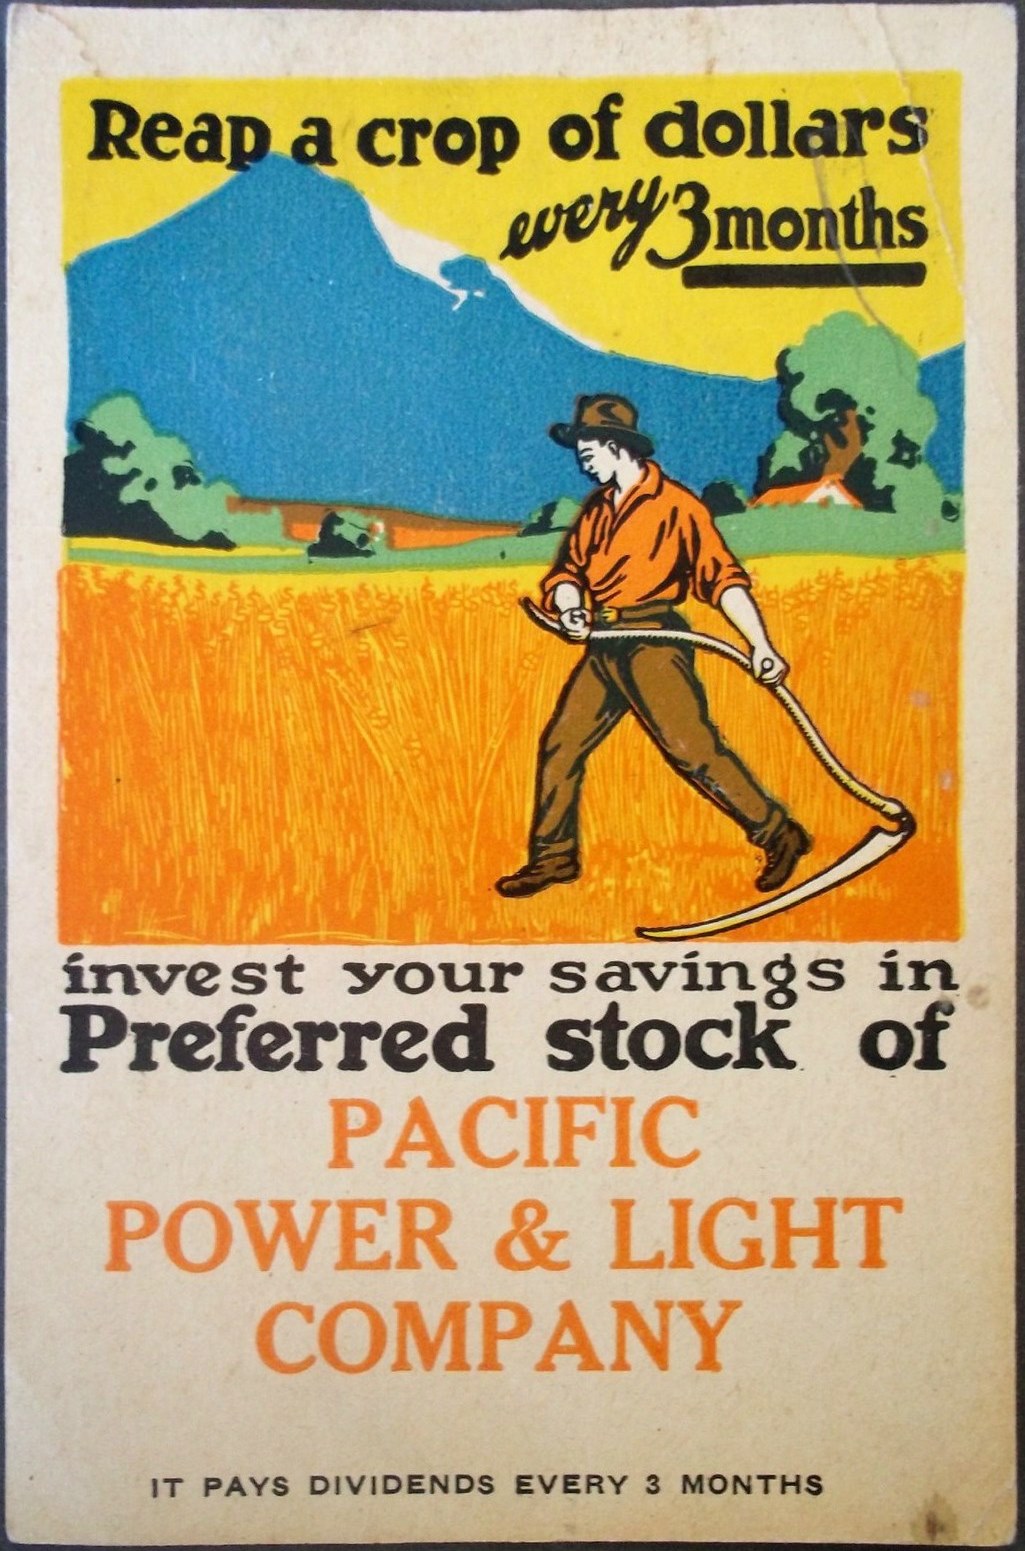 Pacific Power postcard, circa 1930s